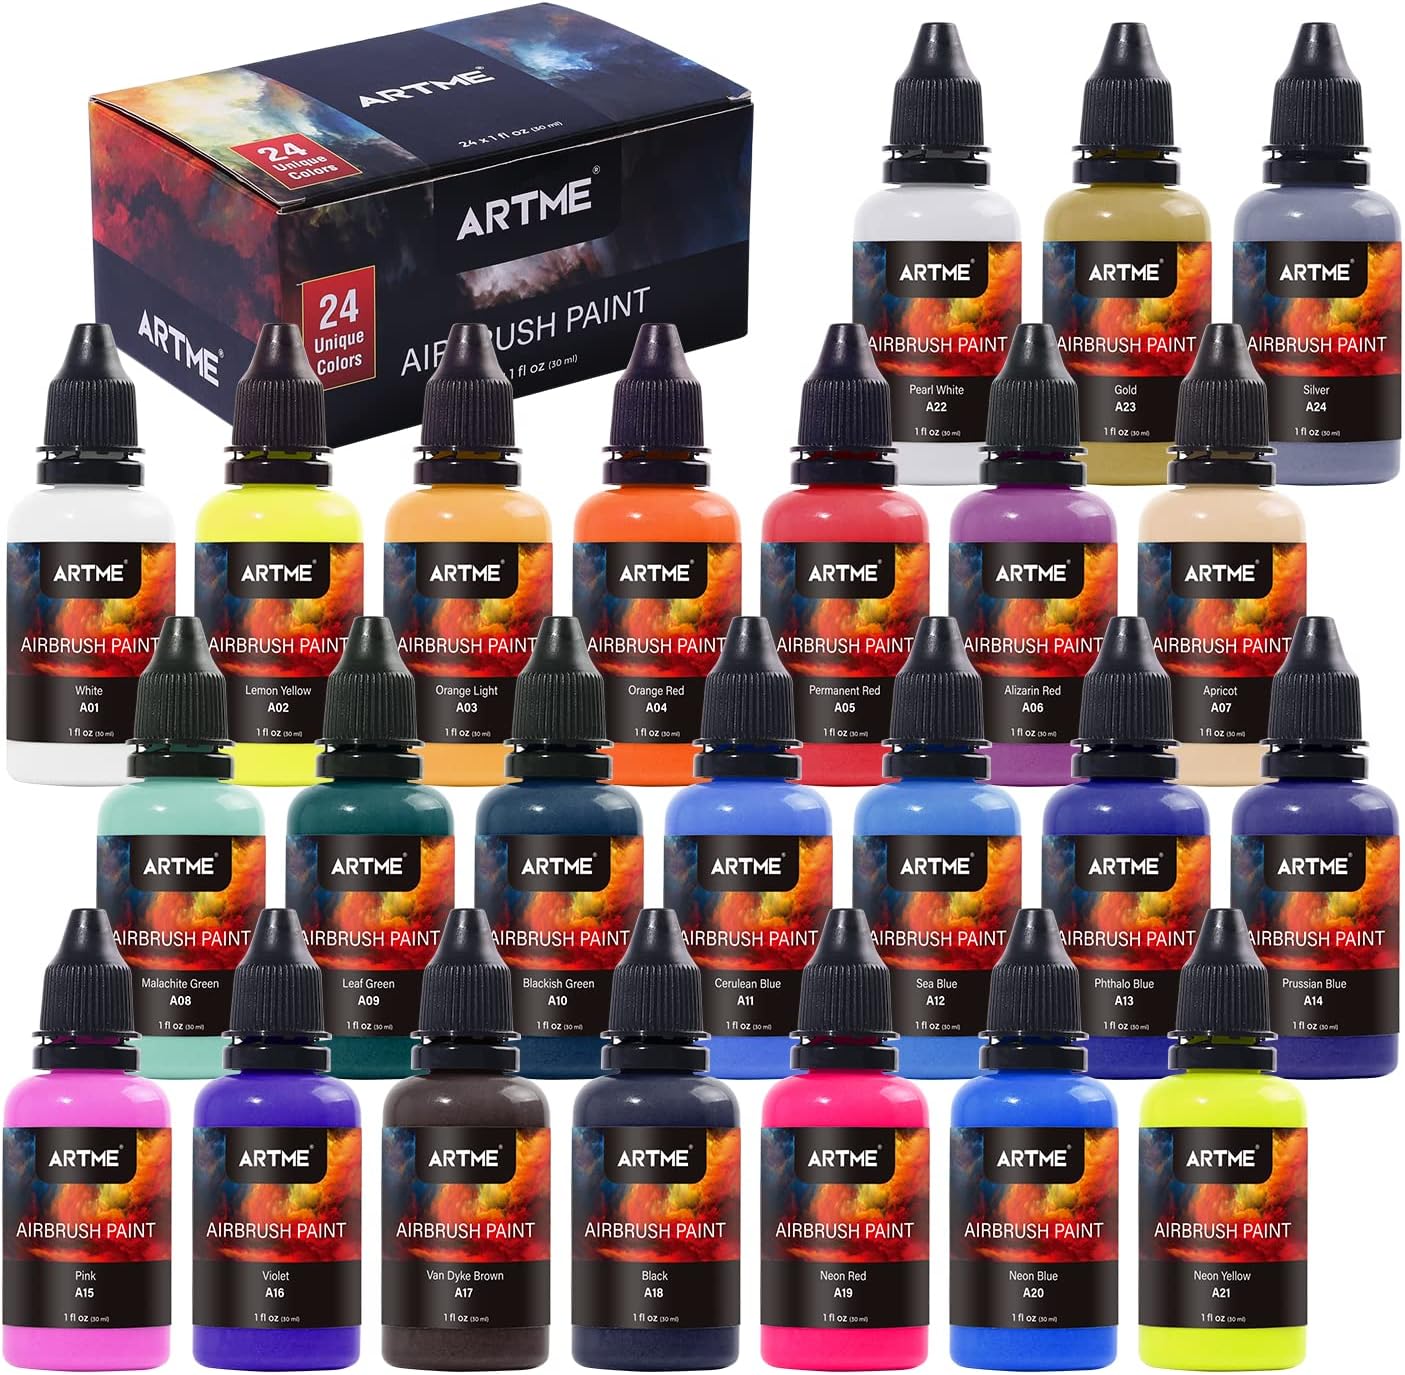 ARTME Airbrush Paint, 24 Colors Airbrush Paint Set [...]